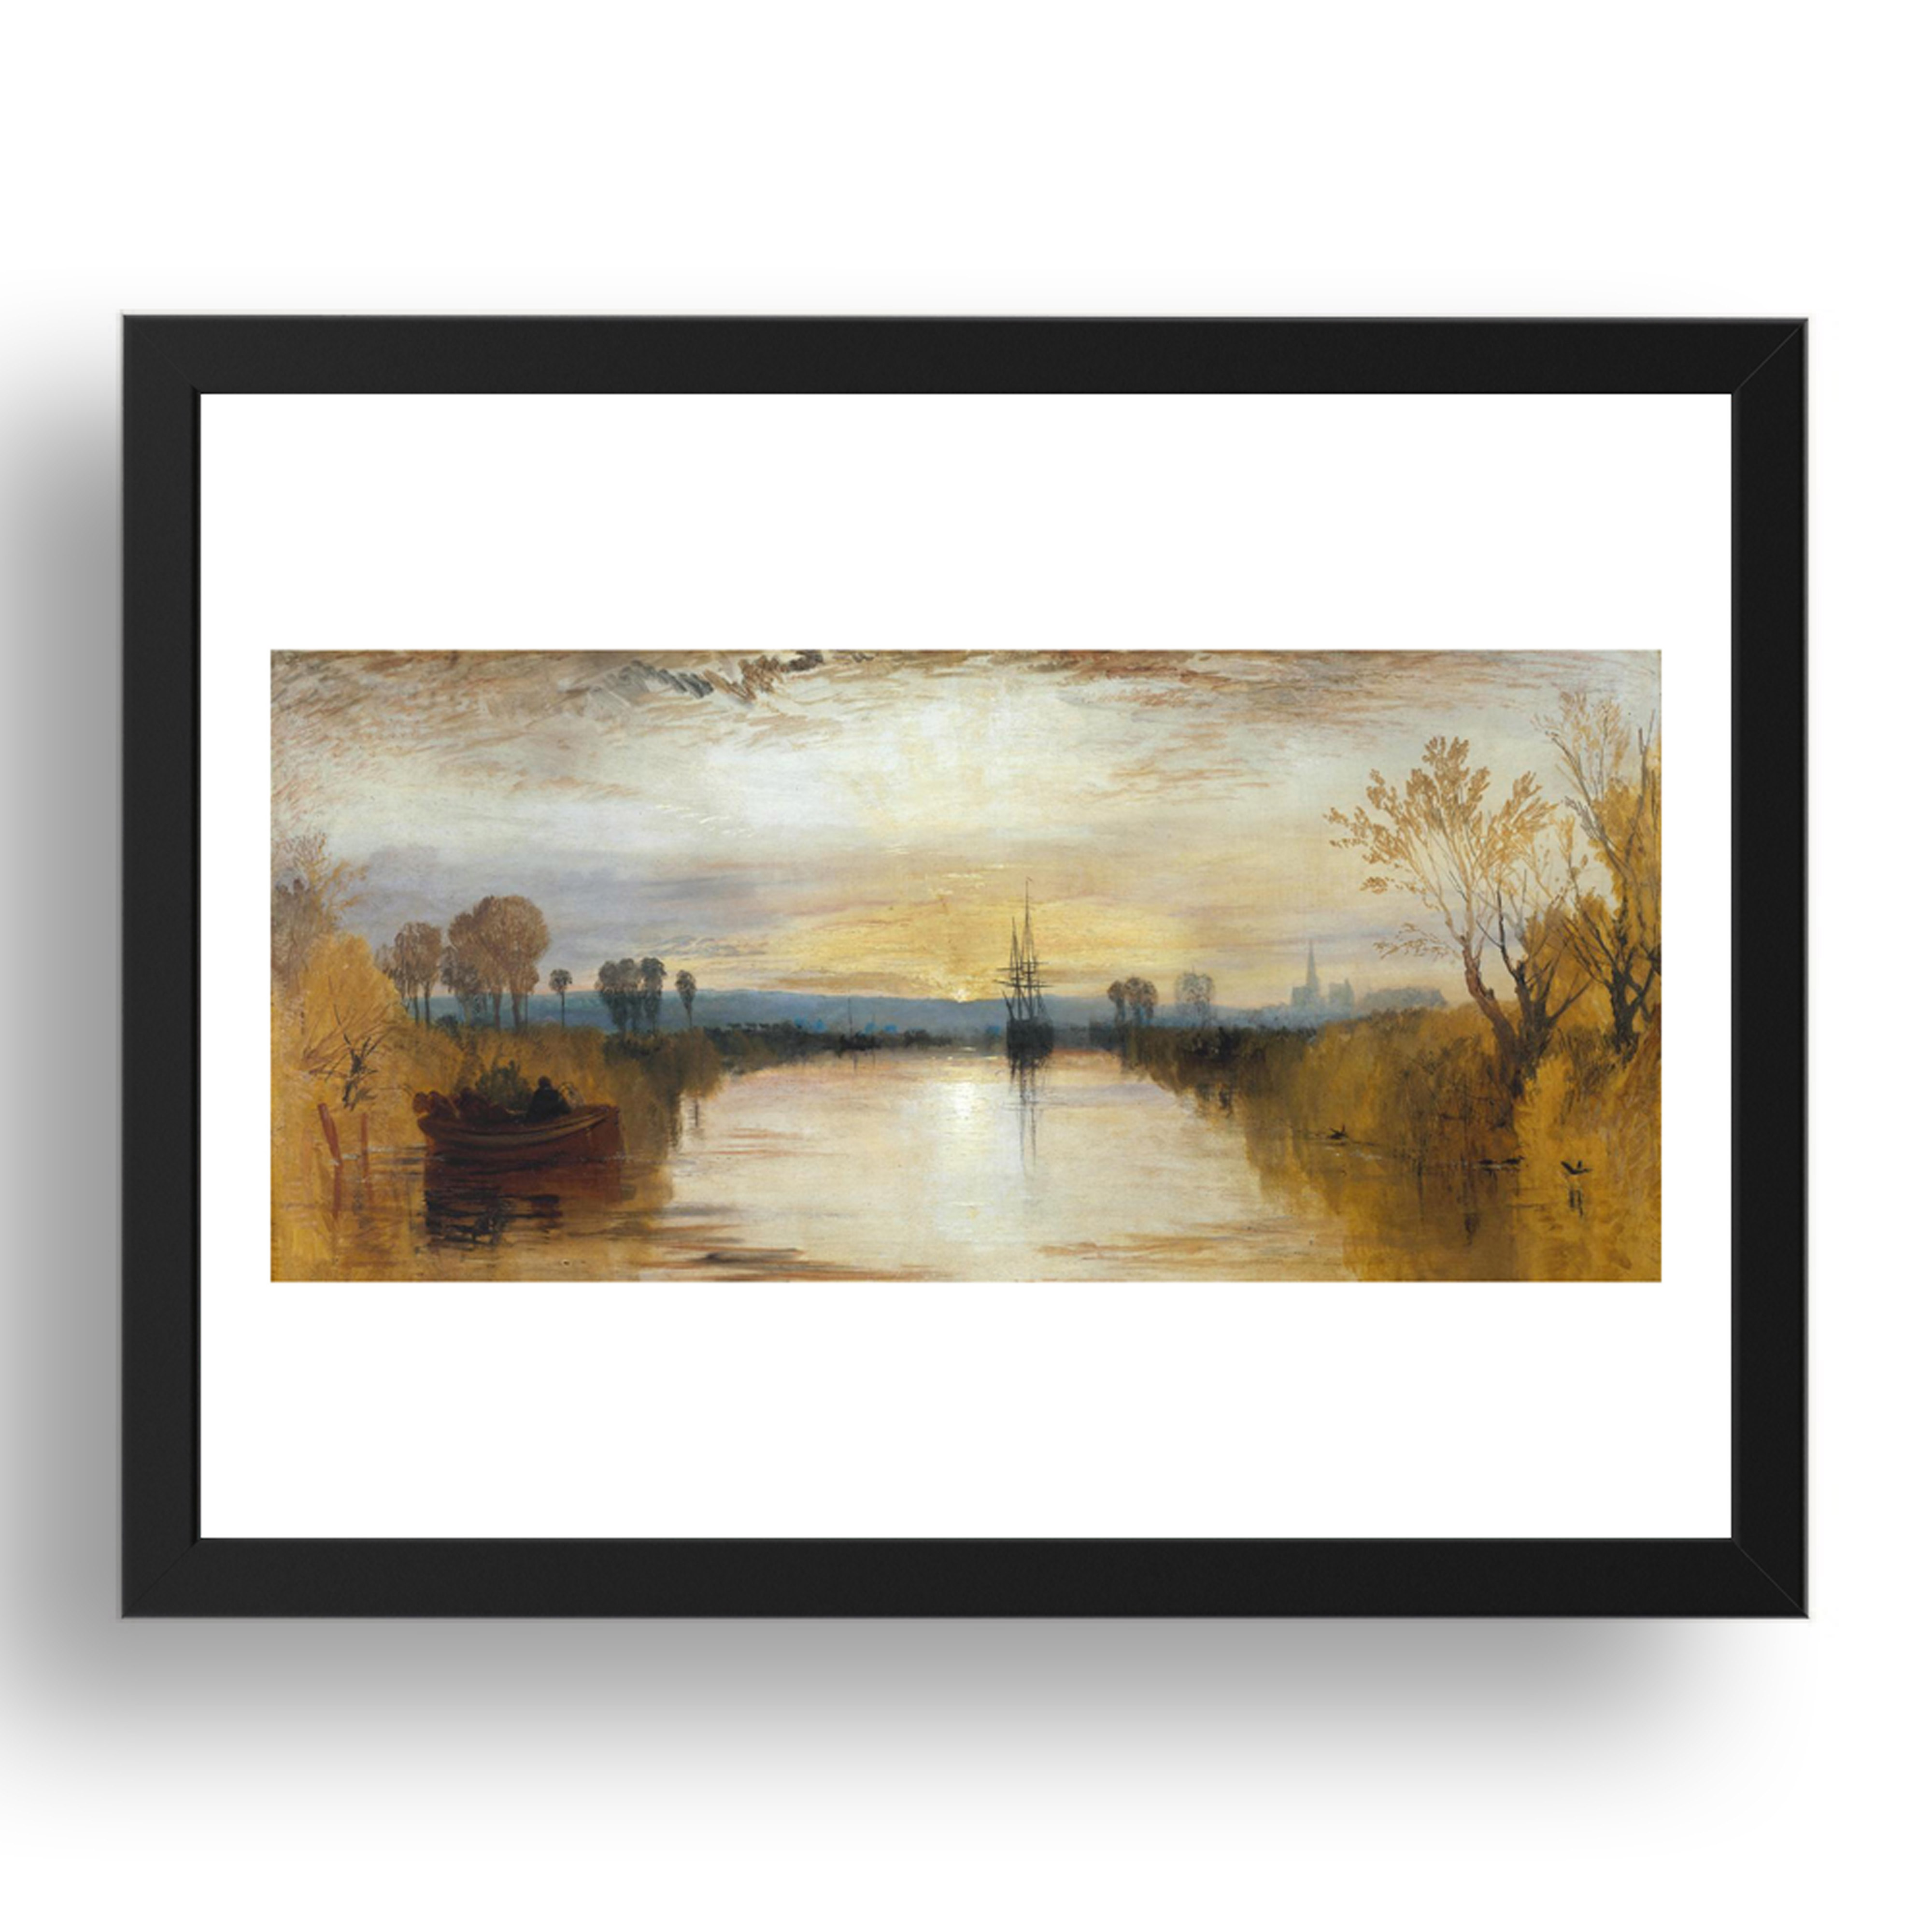 Marco negro J. M. W. Turner - Canal Chichester [1828], A3 (17x13") - Imagen 1 de 1